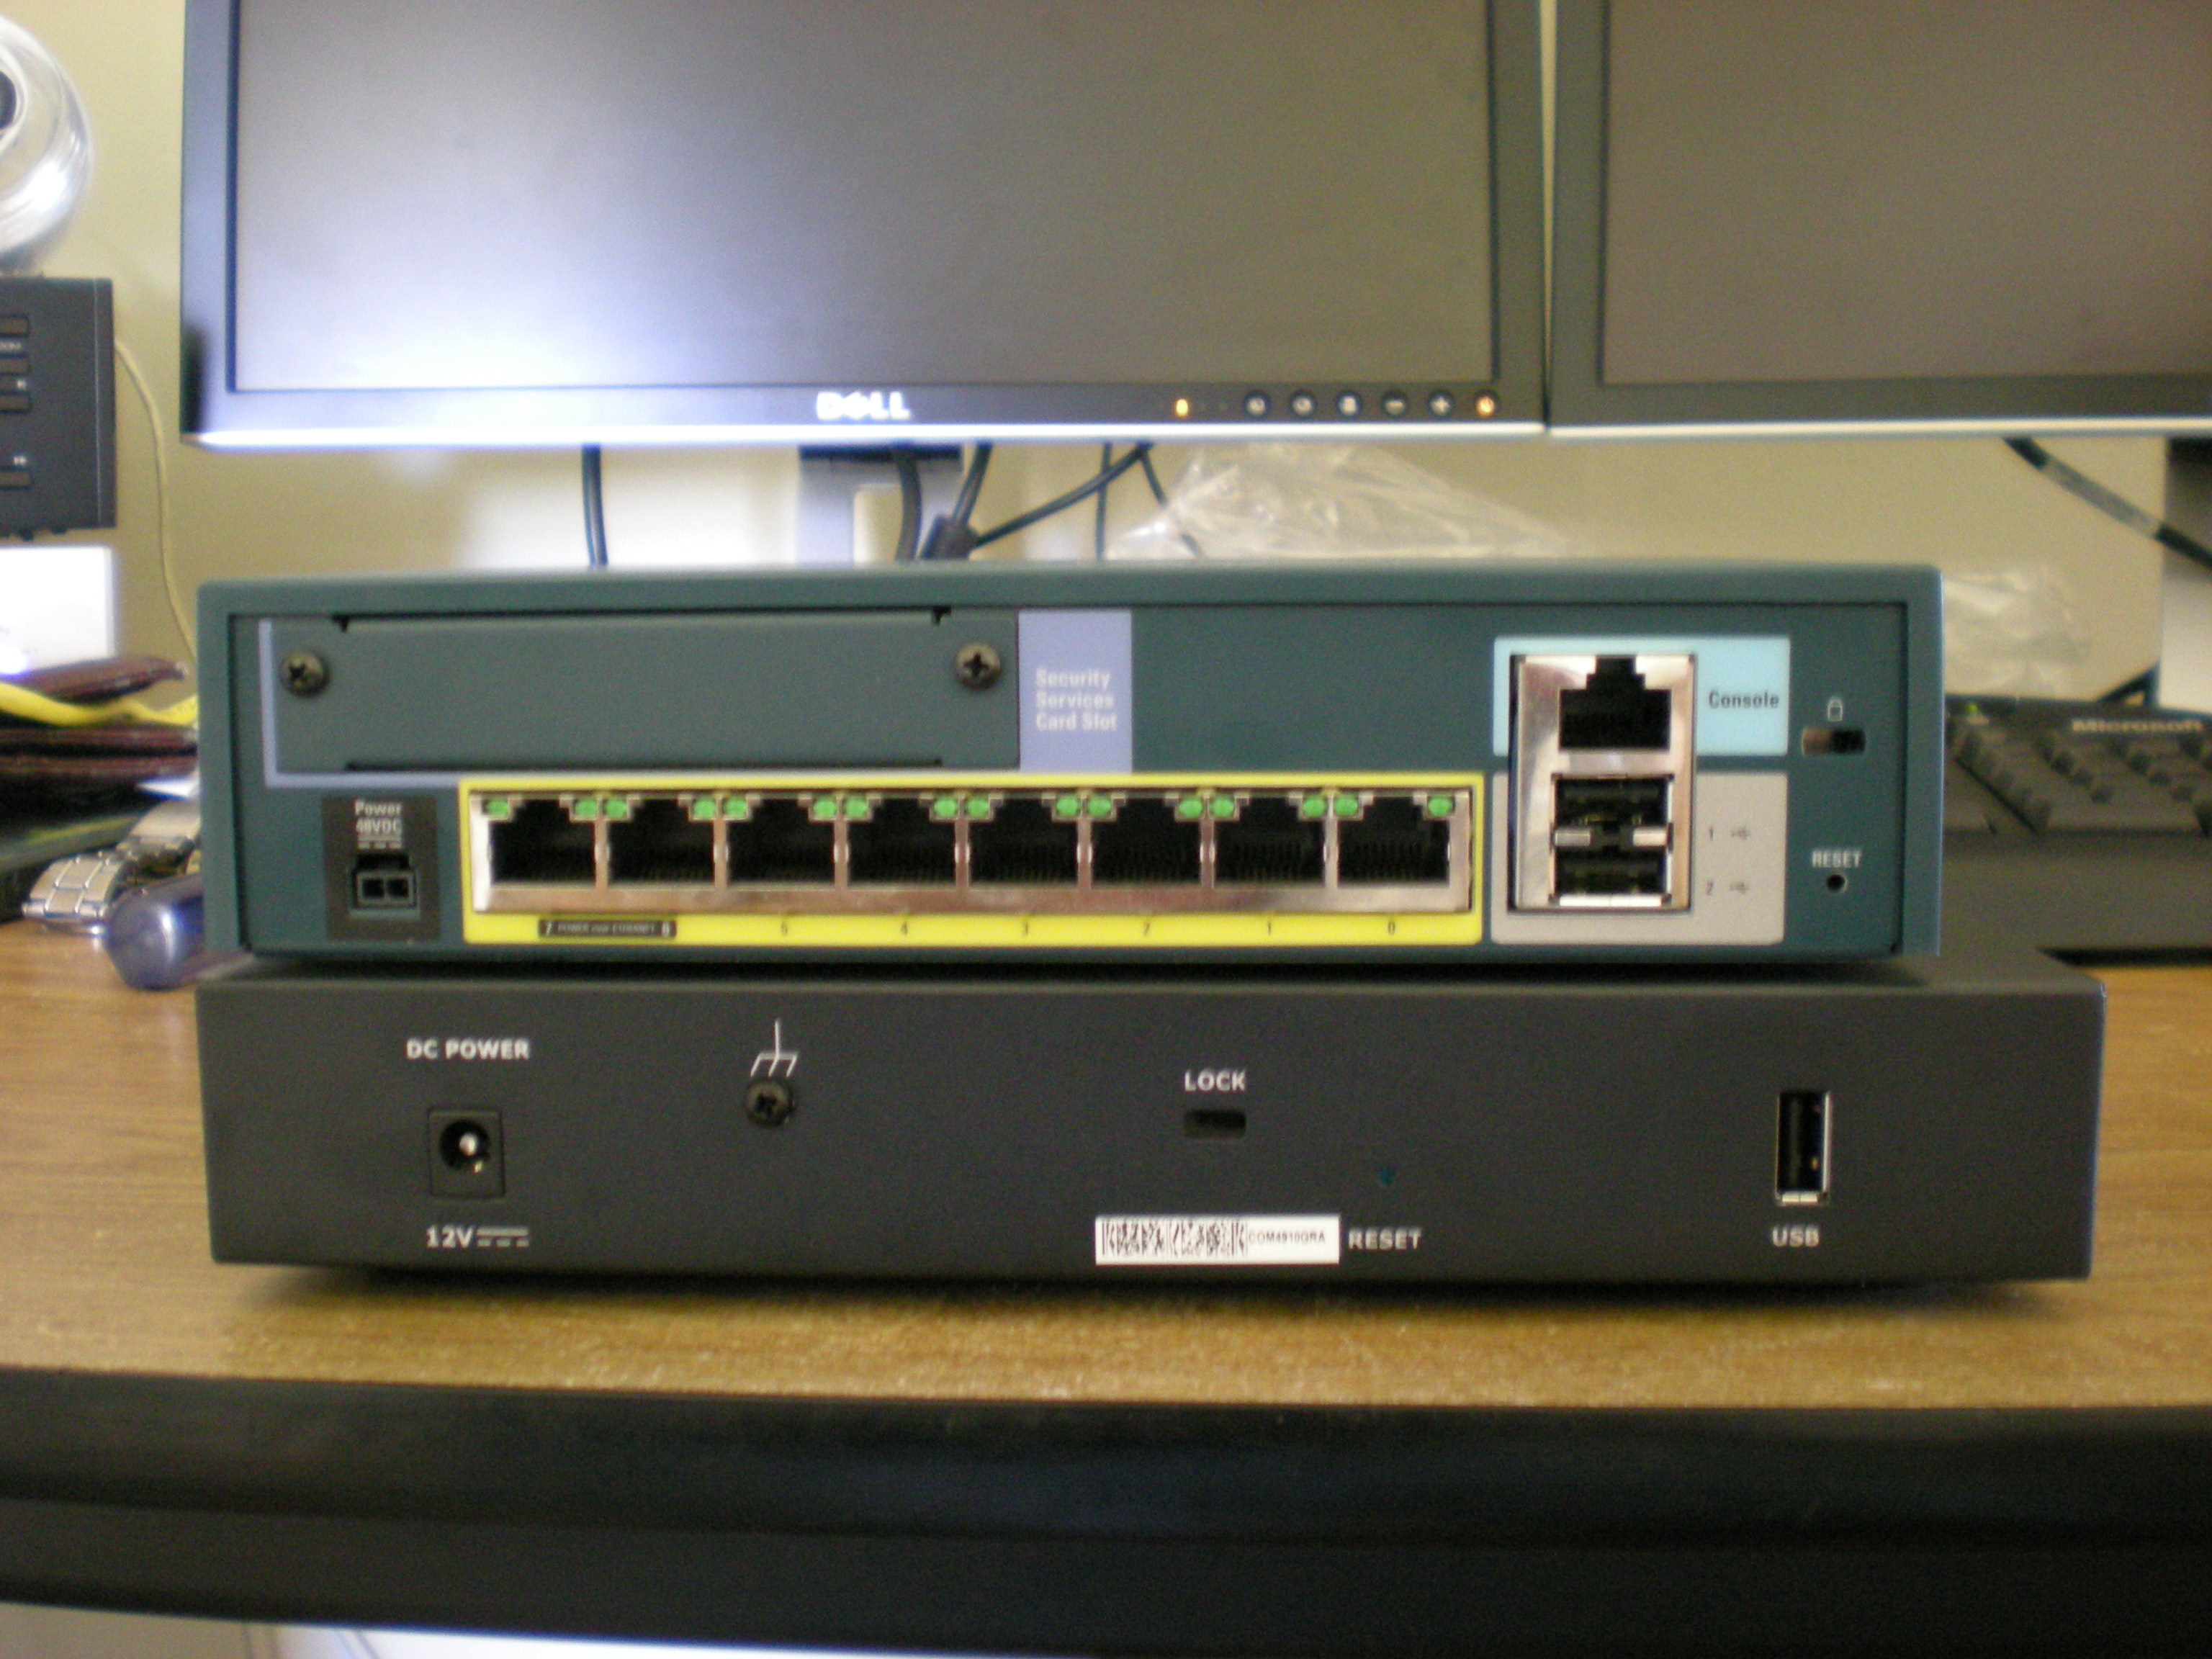 asa 5505 remote access vpn setup